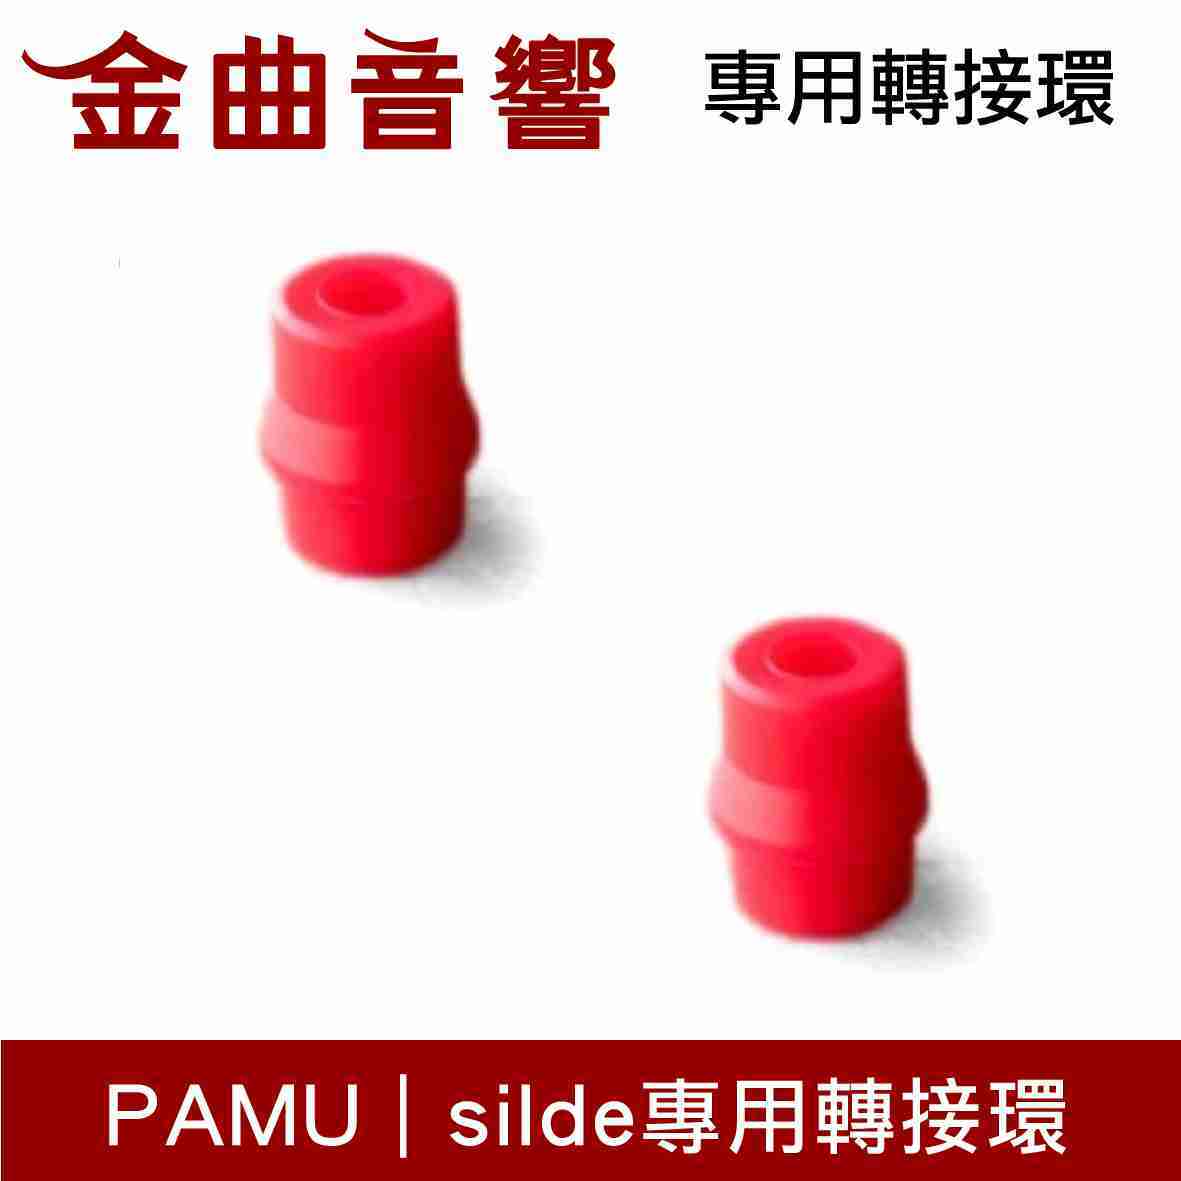 Pamu slide 專用 耳機 轉接環一對 耳塞 | 金曲音響